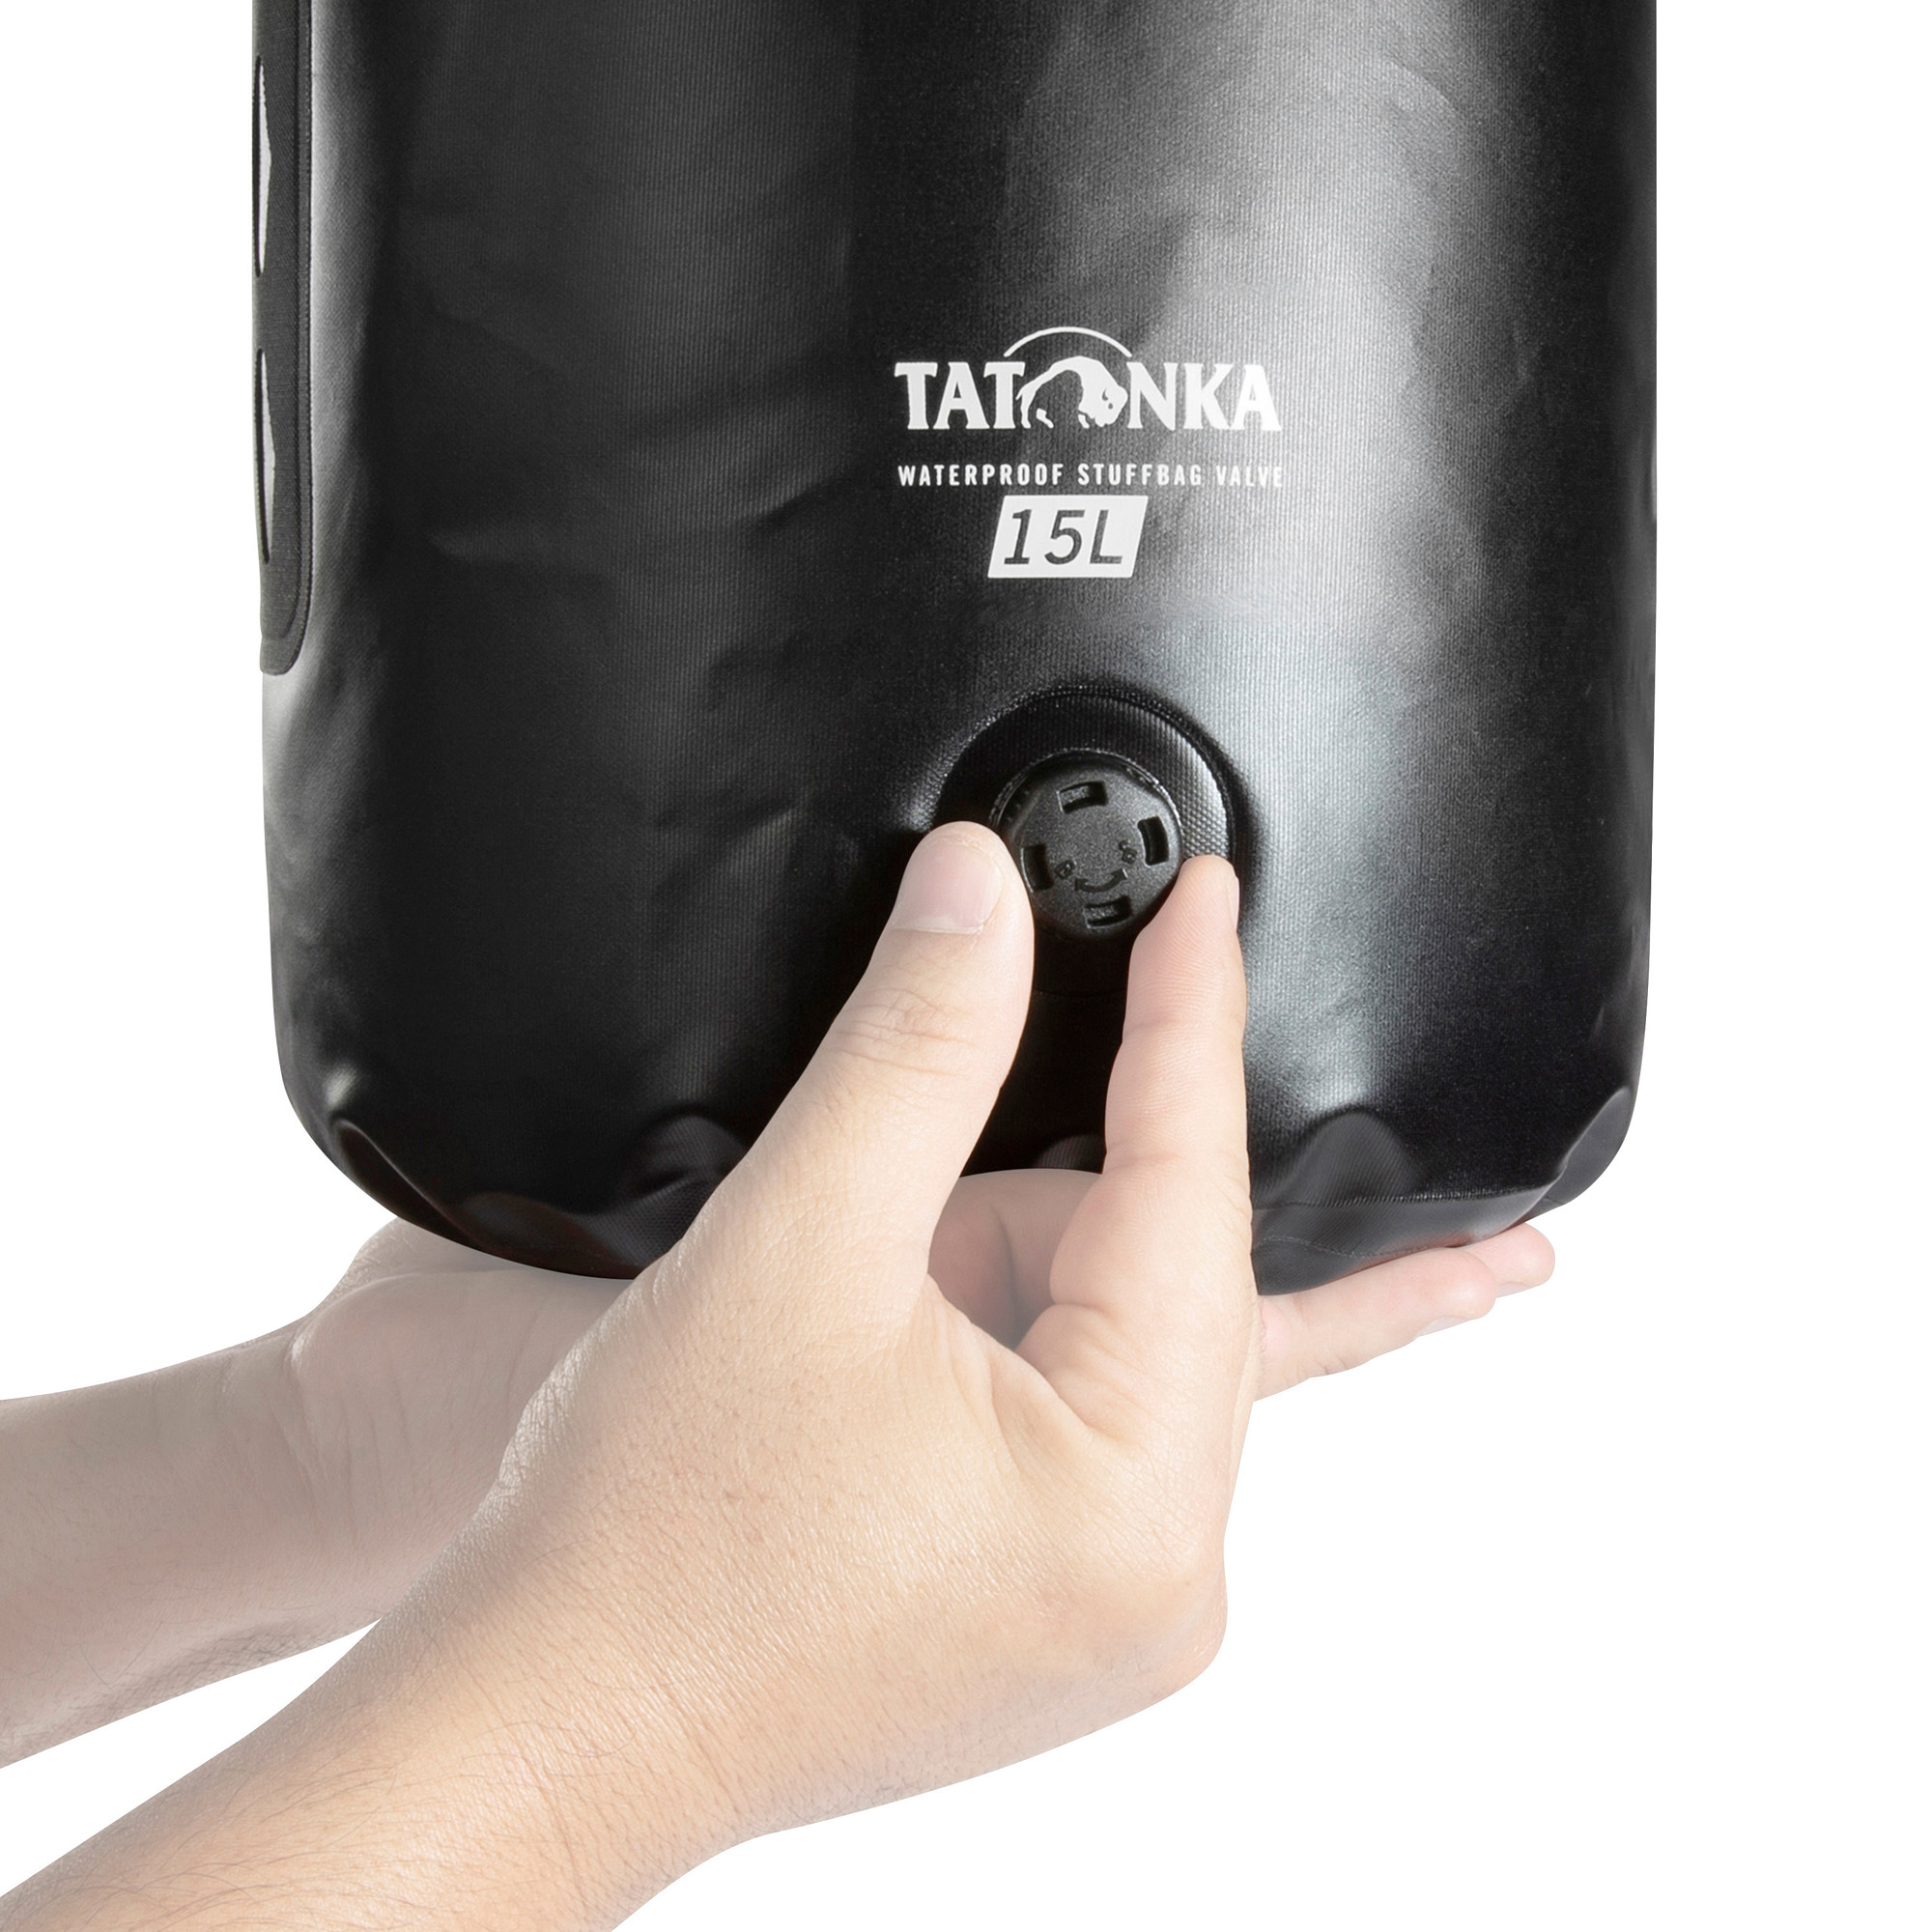 Tatonka WP Stuffbag Valve 15l black schwarz Reisezubehör 4013236393606